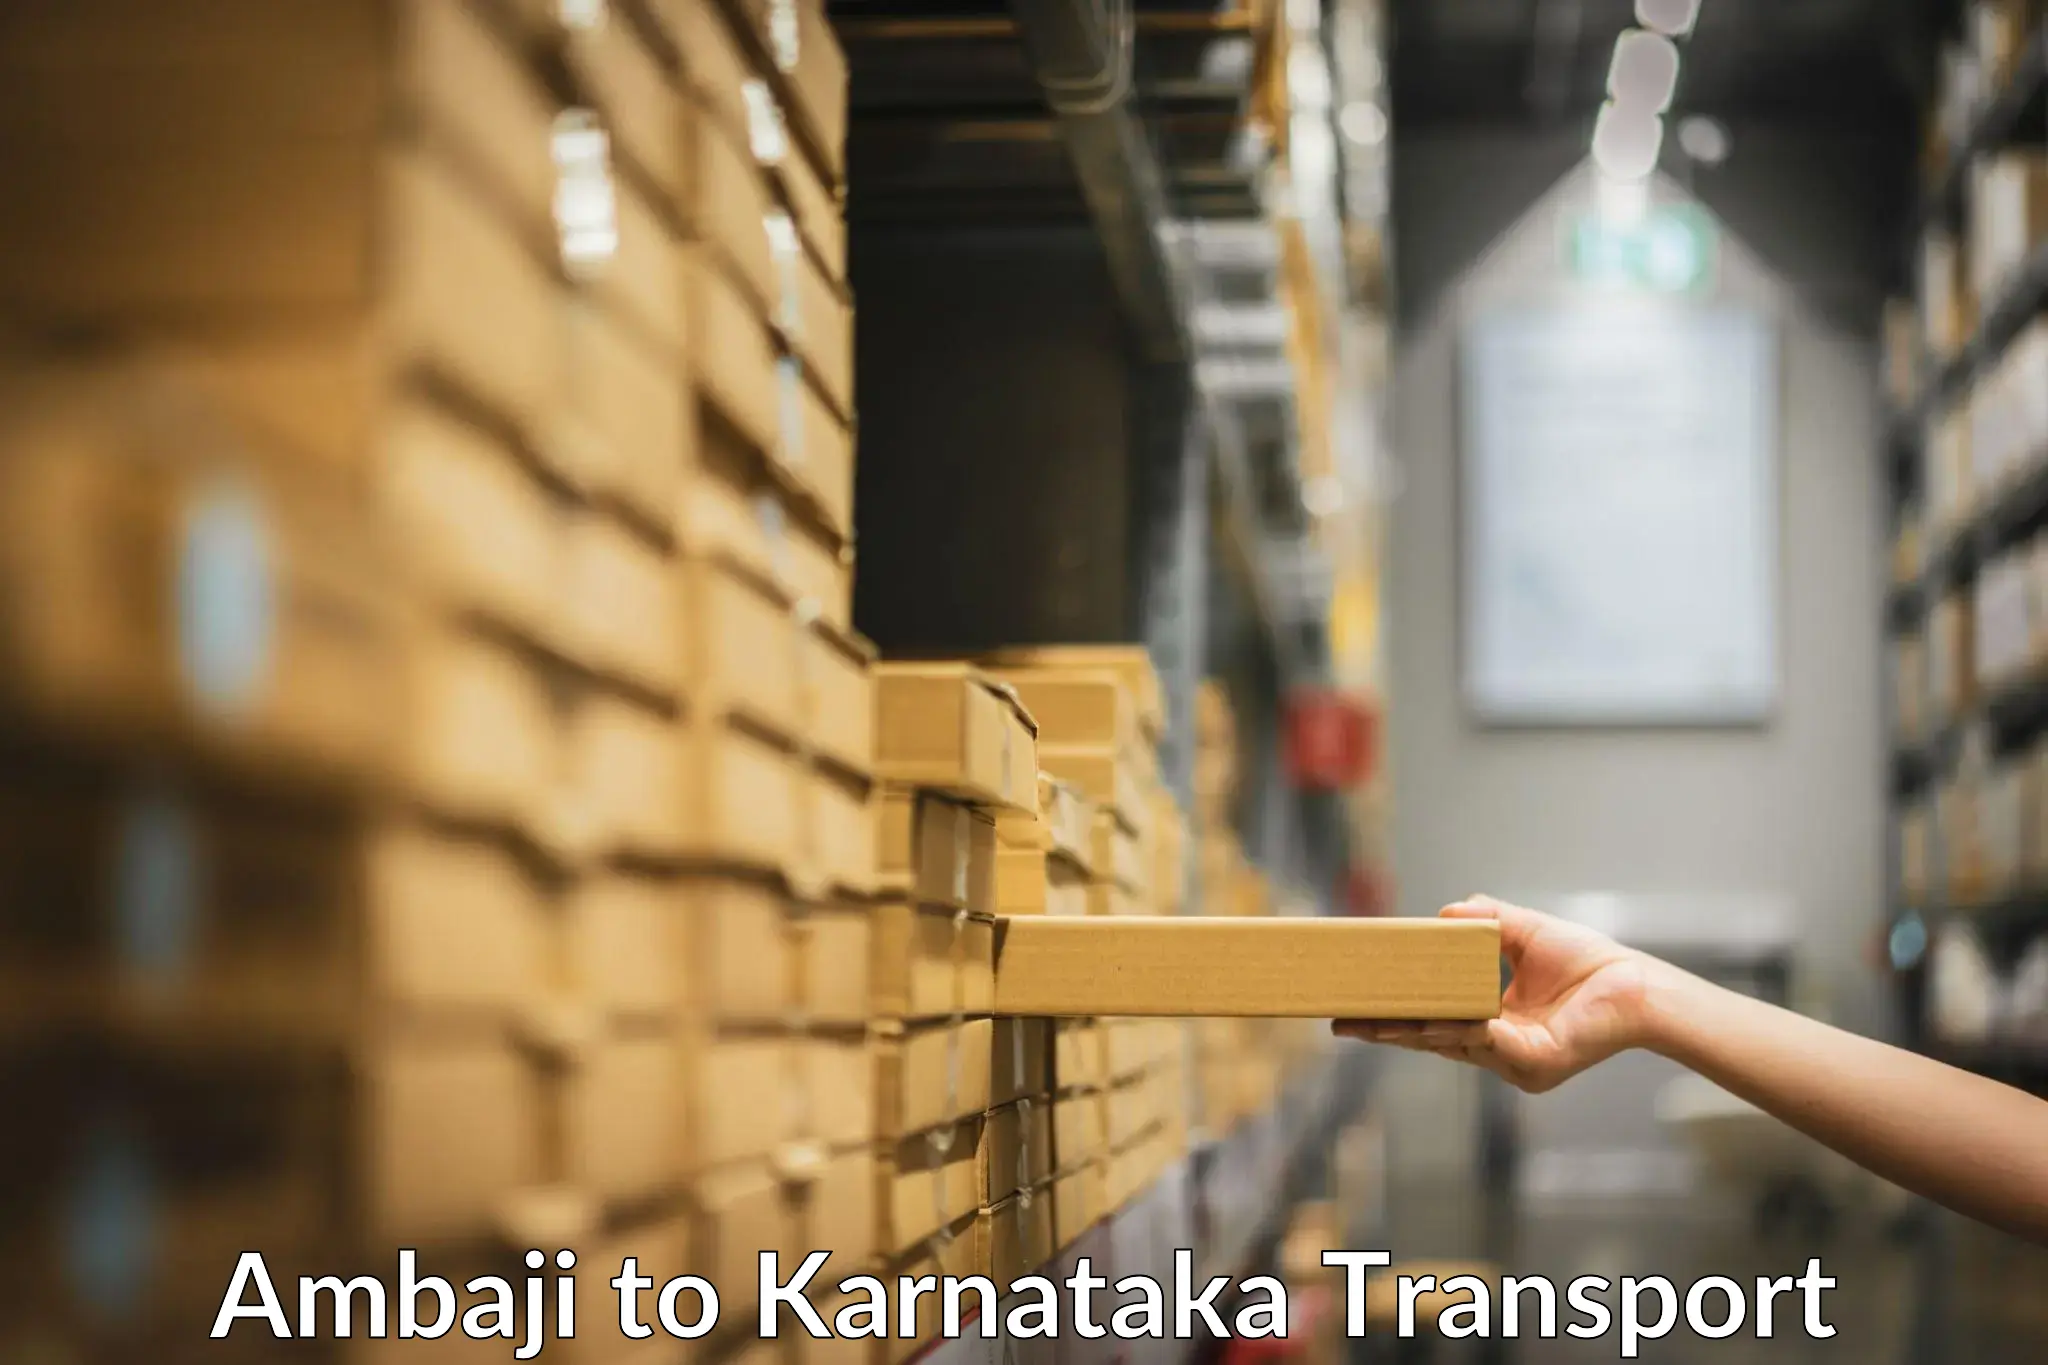 Furniture transport service Ambaji to Karnataka